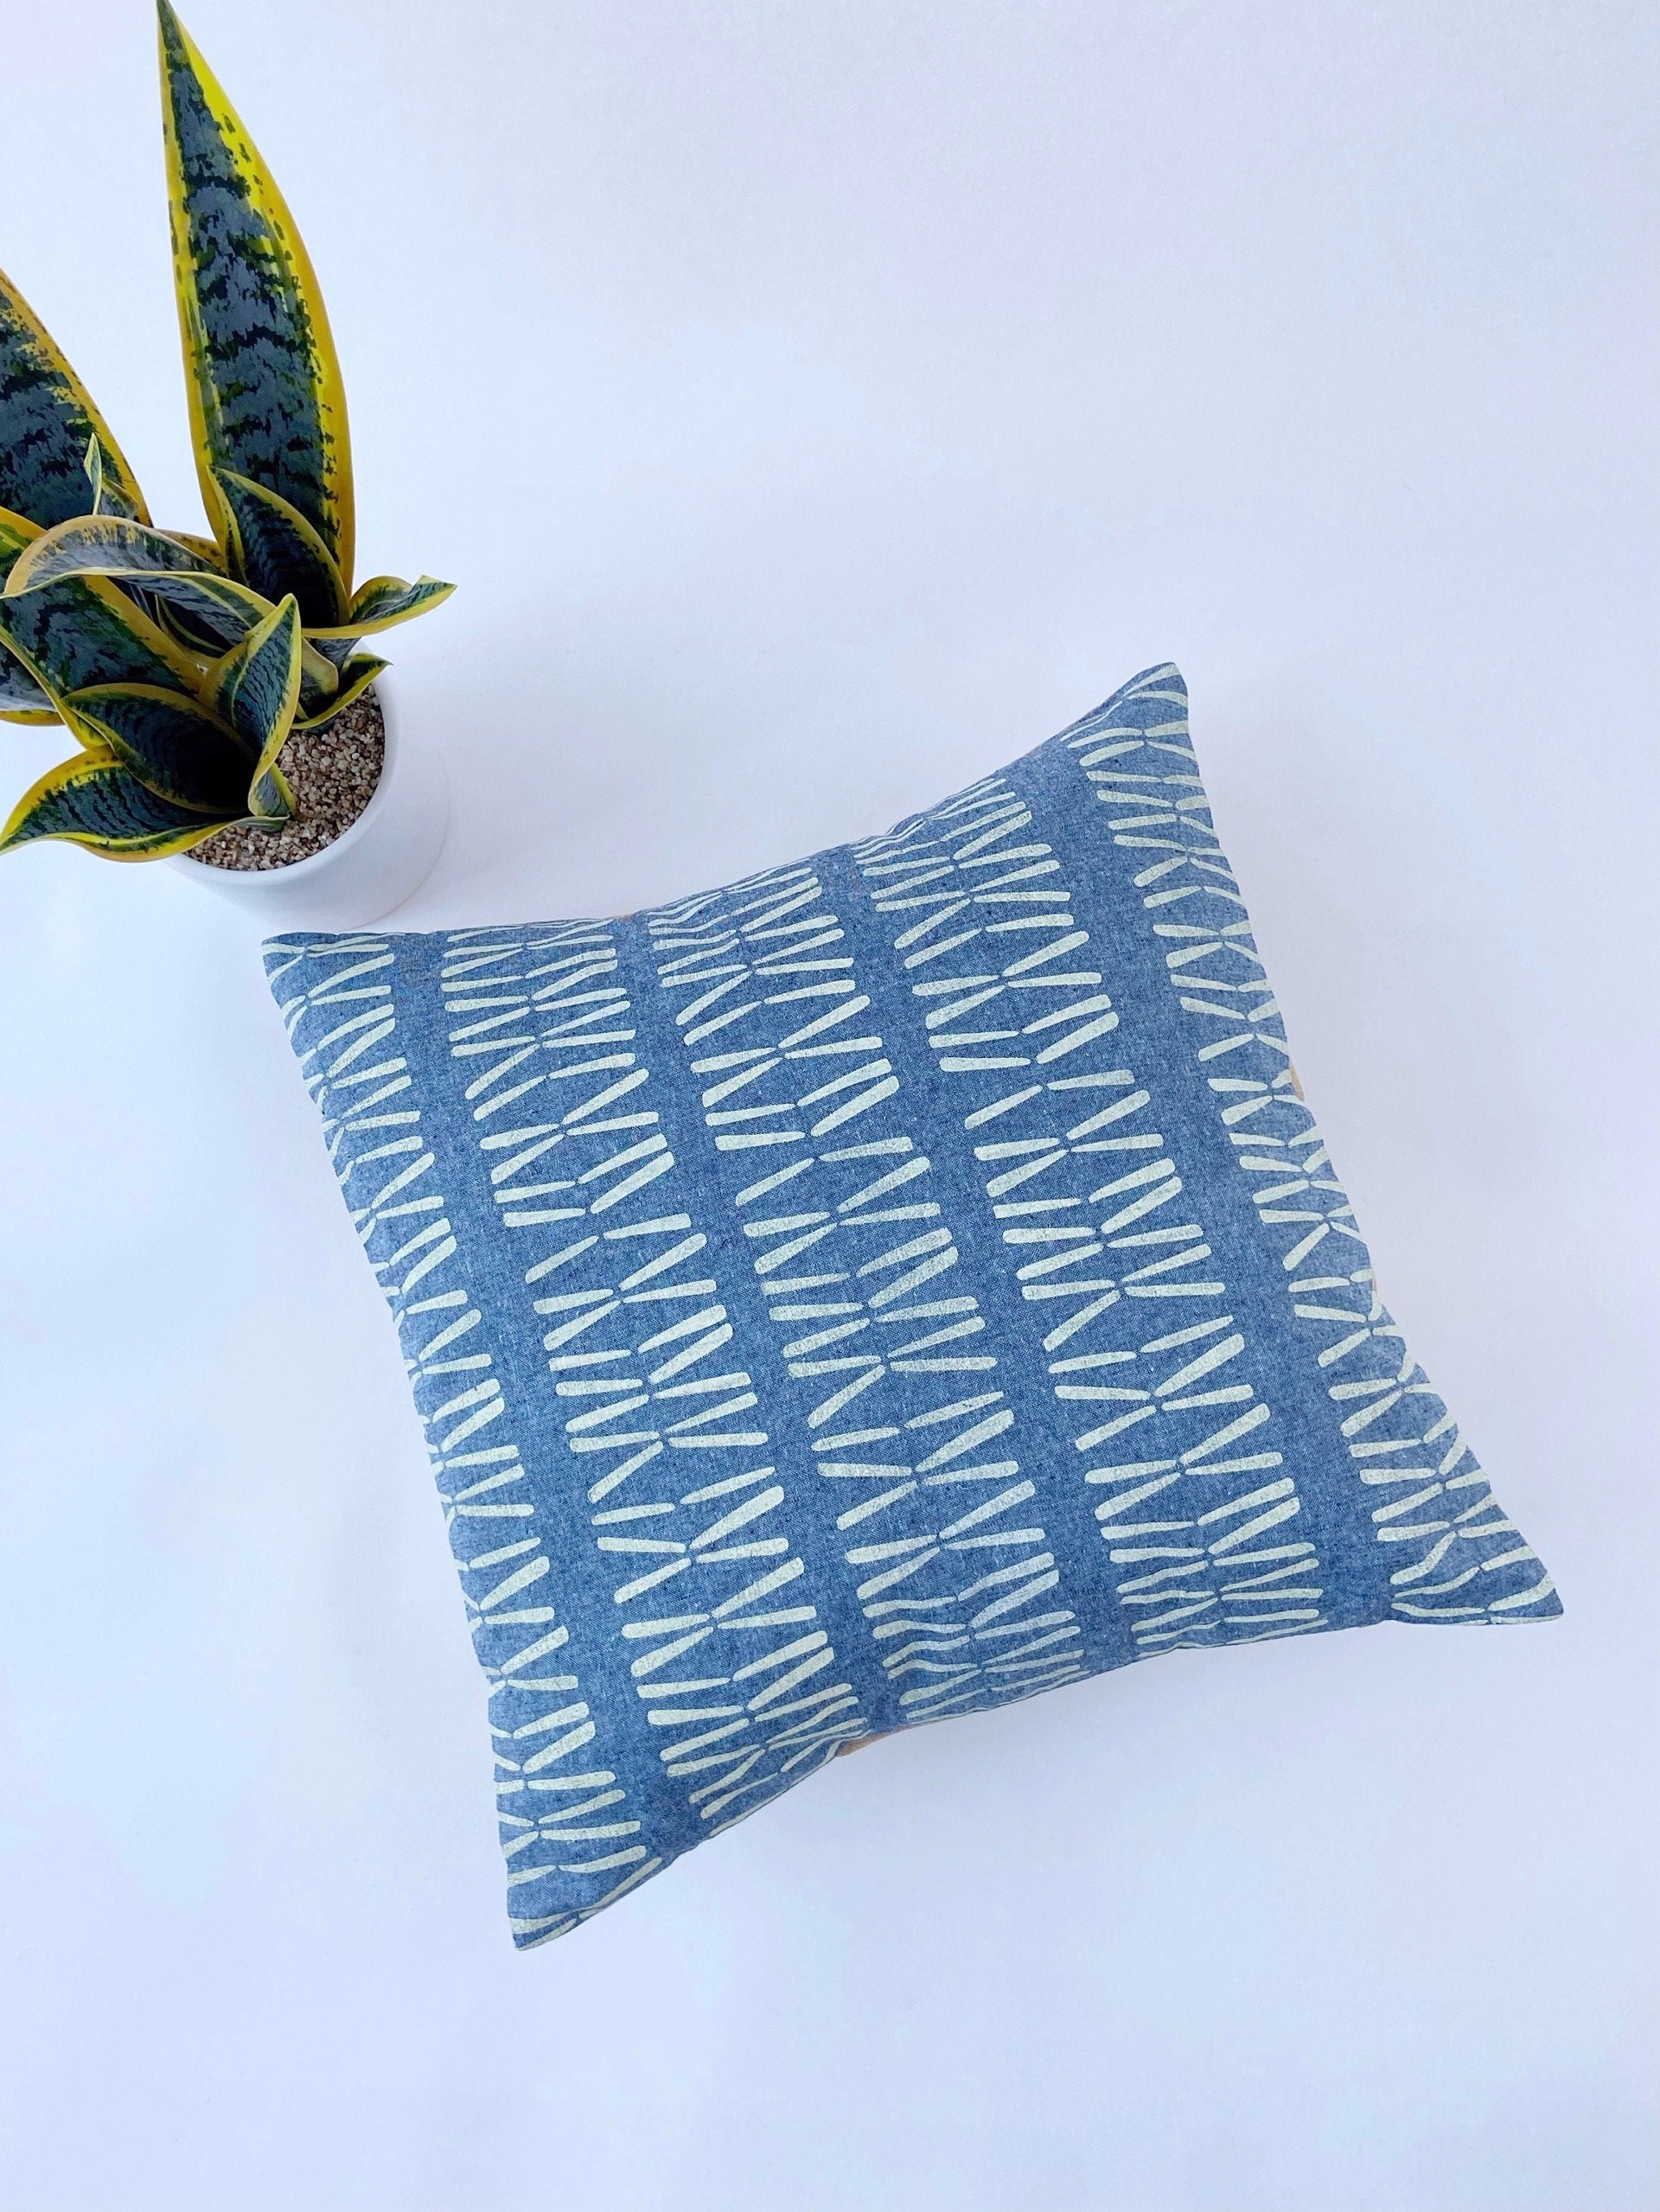 Block Printed Pillow- Blue by Kris Hackl